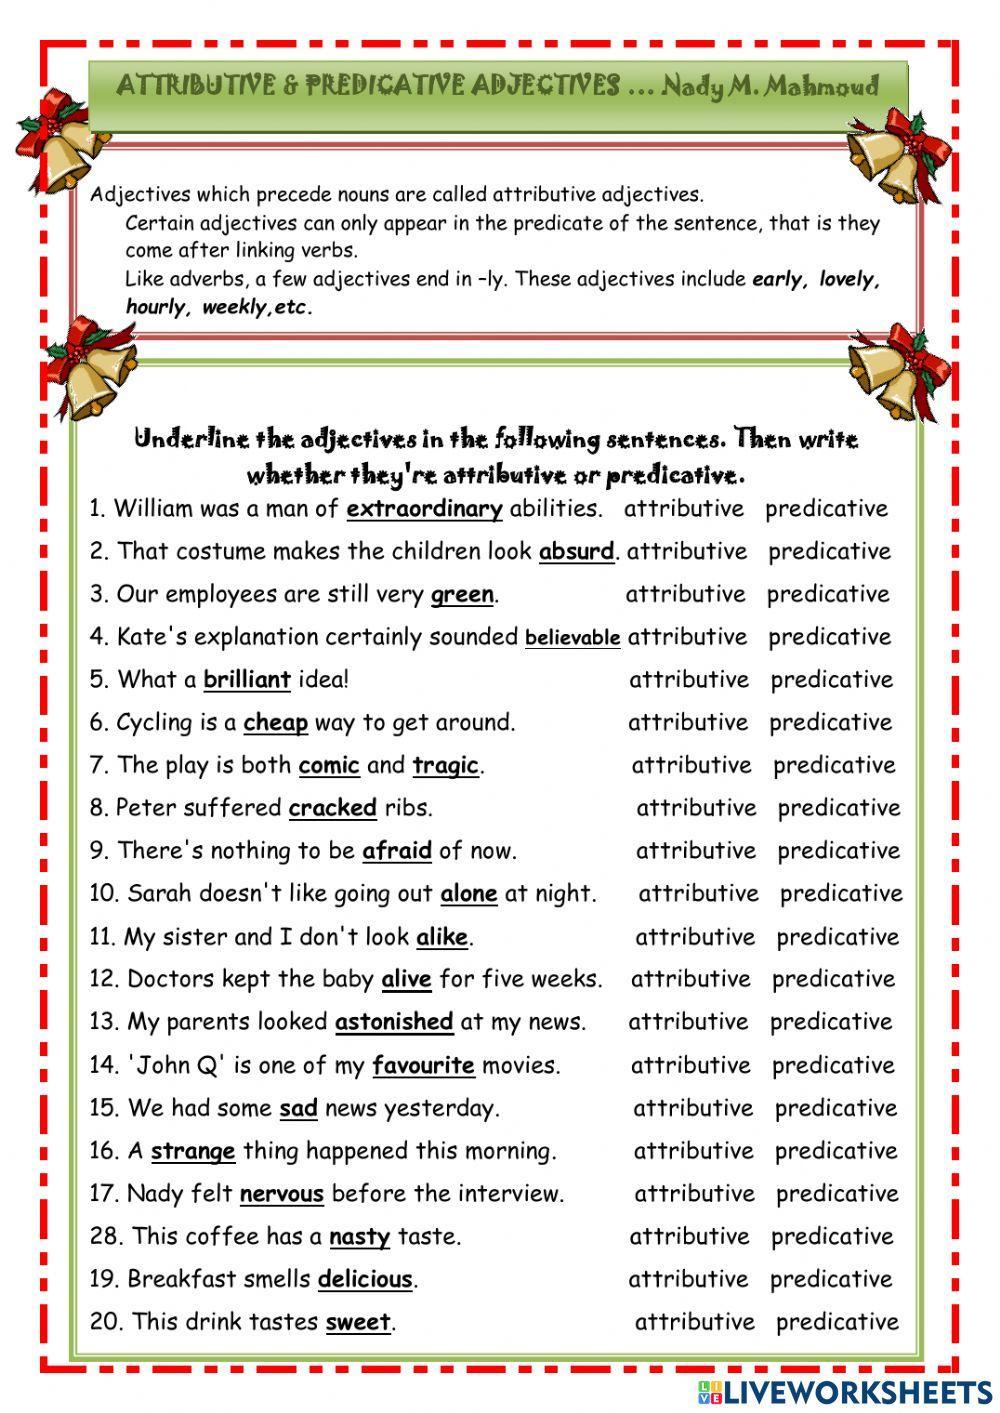 predicative-vs-attributive-adjectives-worksheet-live-worksheets